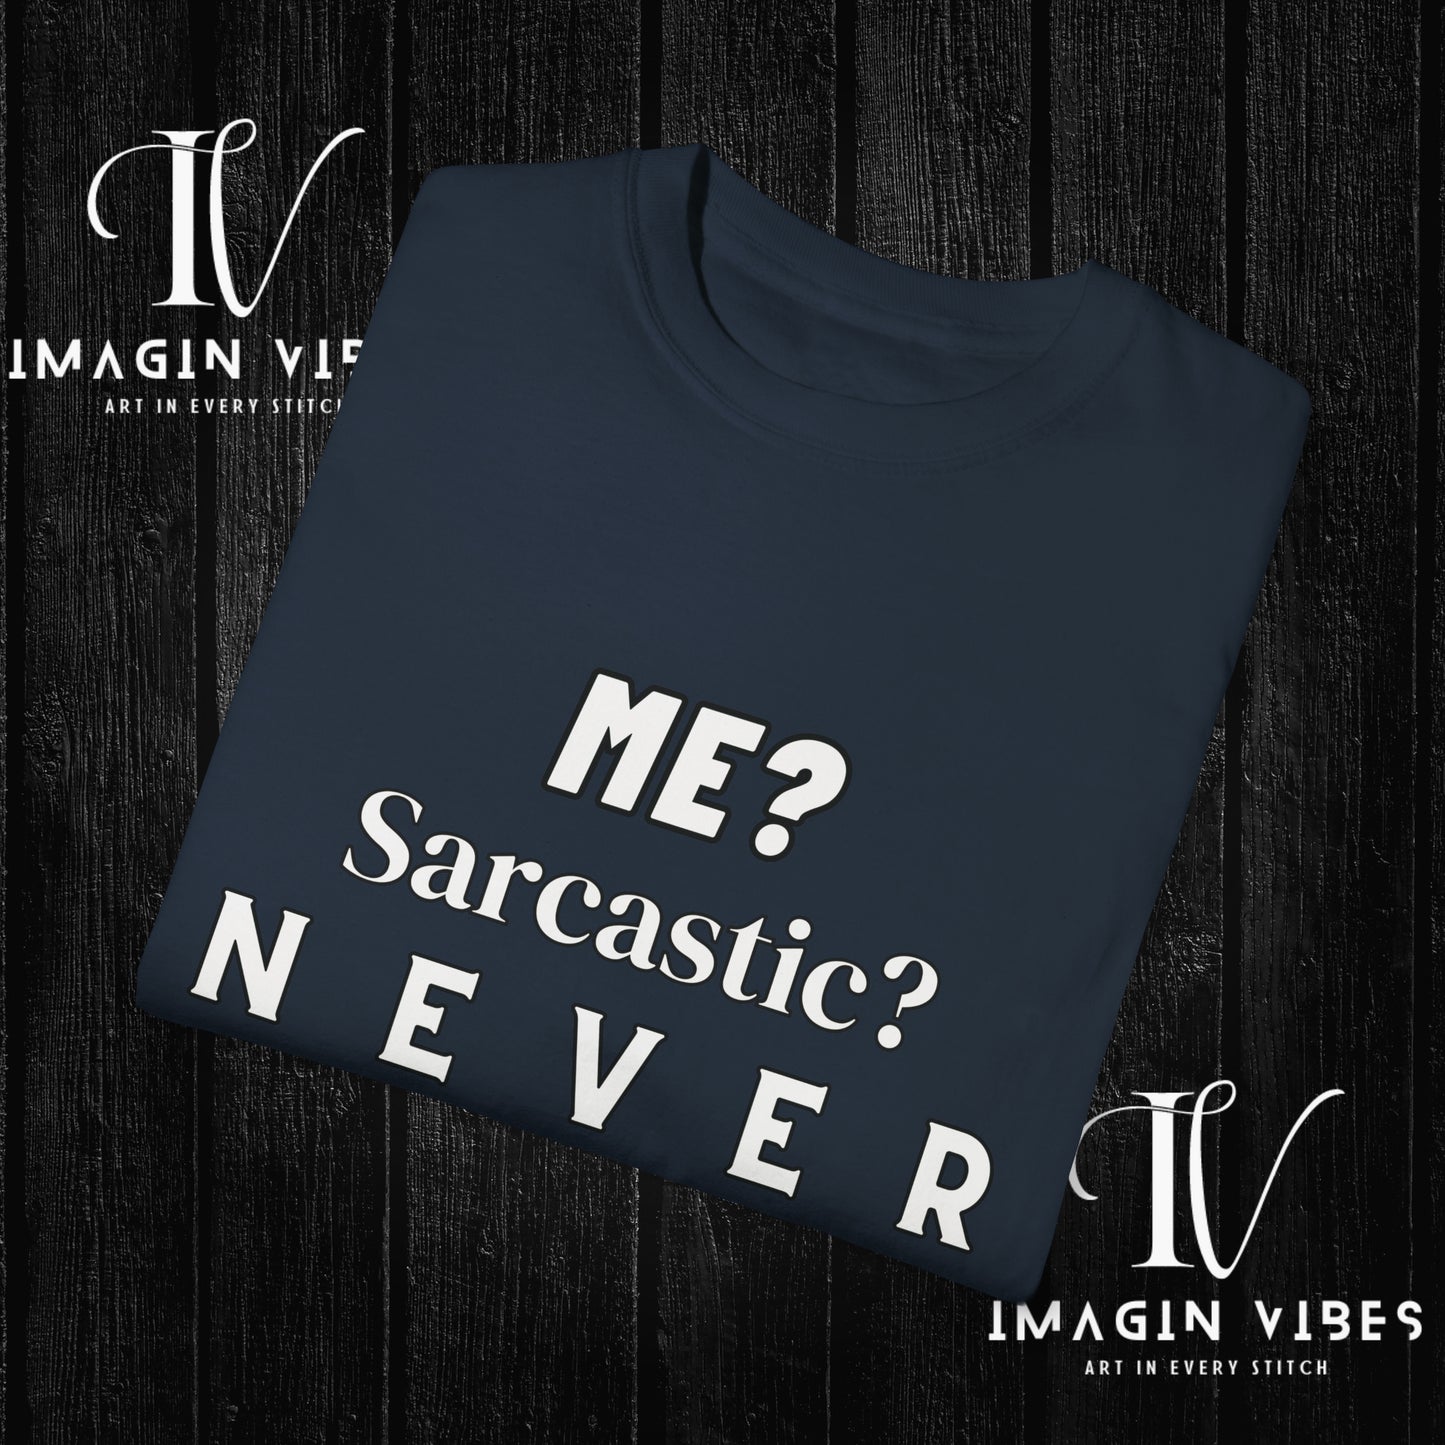 Me? Sarcastic? Never T-Shirt - Unisex Tee - Funny Sarcastic Shirt T-Shirt   